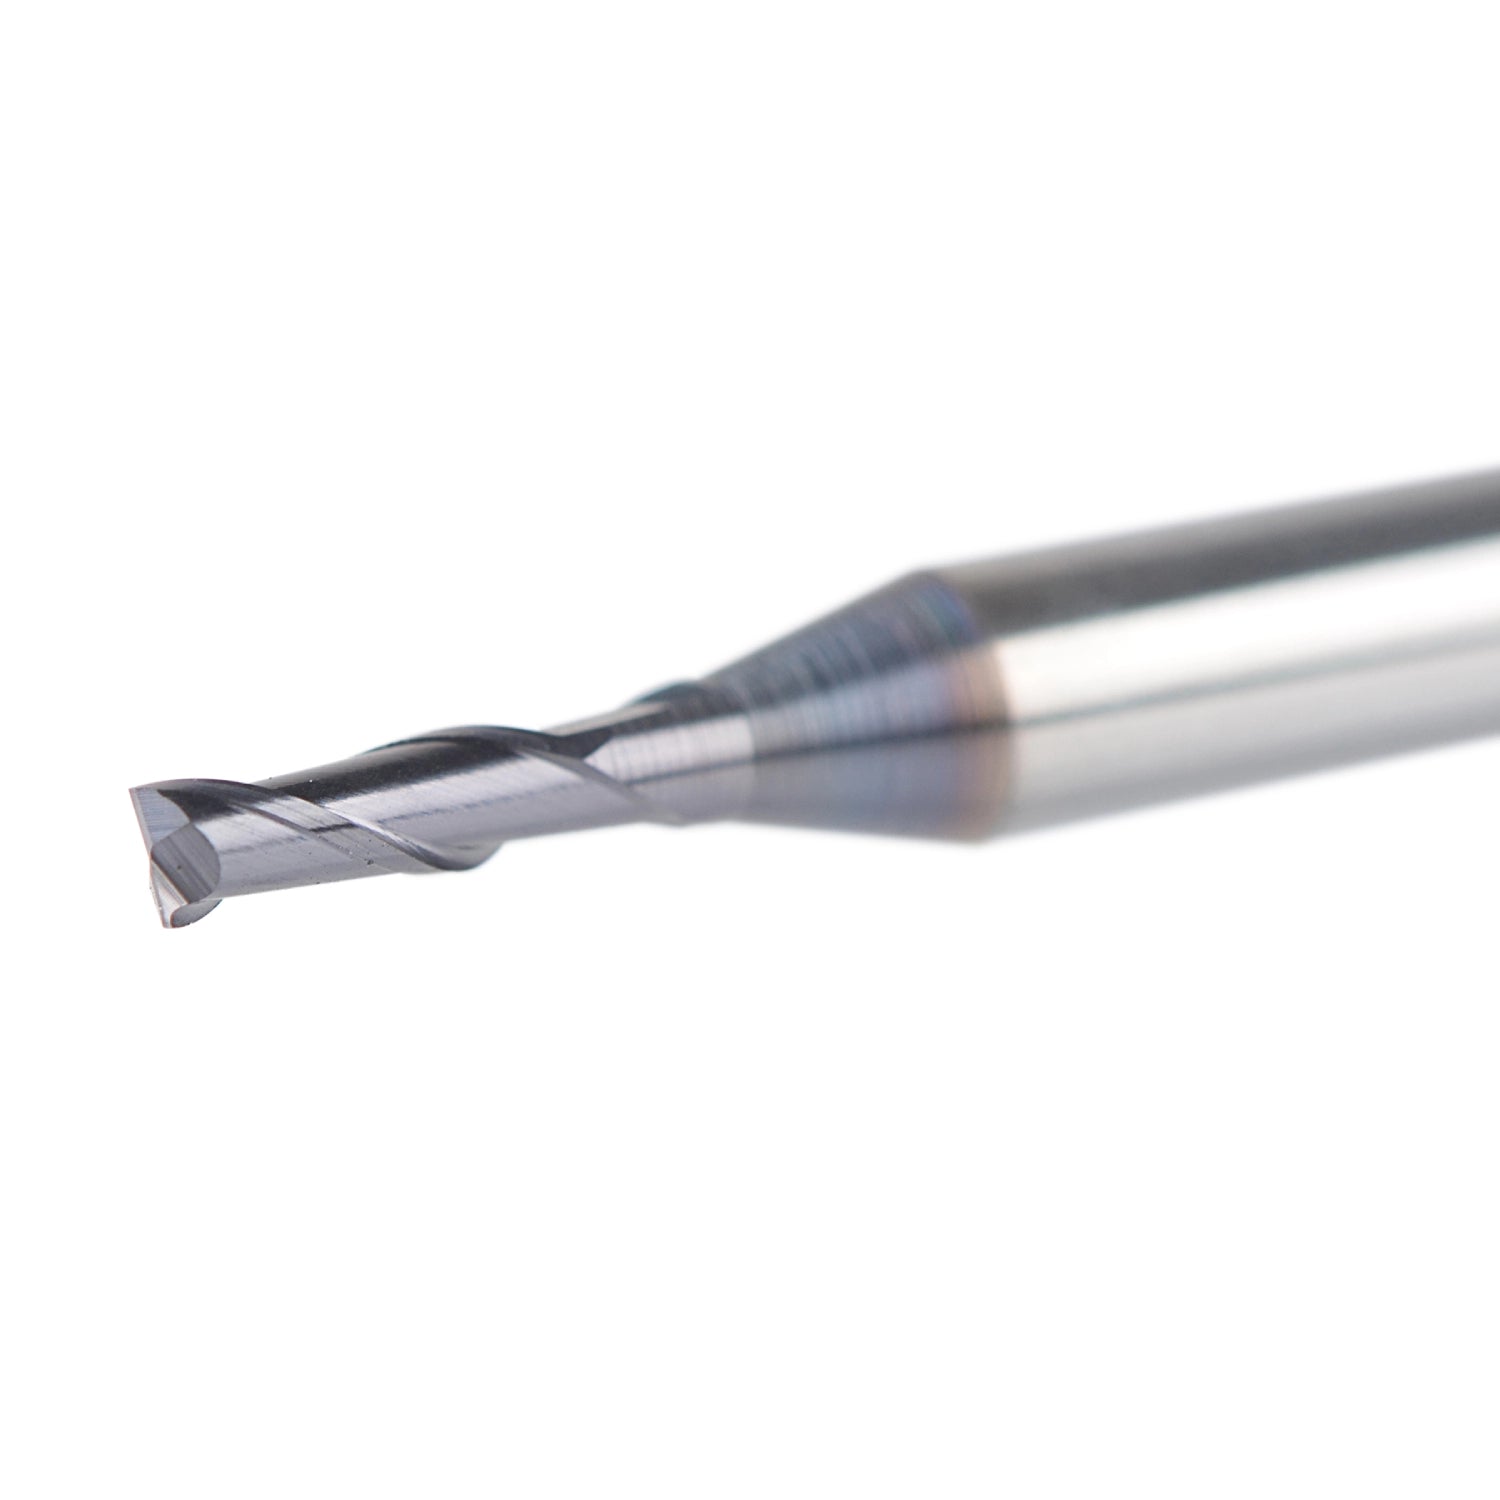 SpeTool 2 Flute 1/16 Dia 1/8 Shank Flat Nose Carbide Steel Cut End